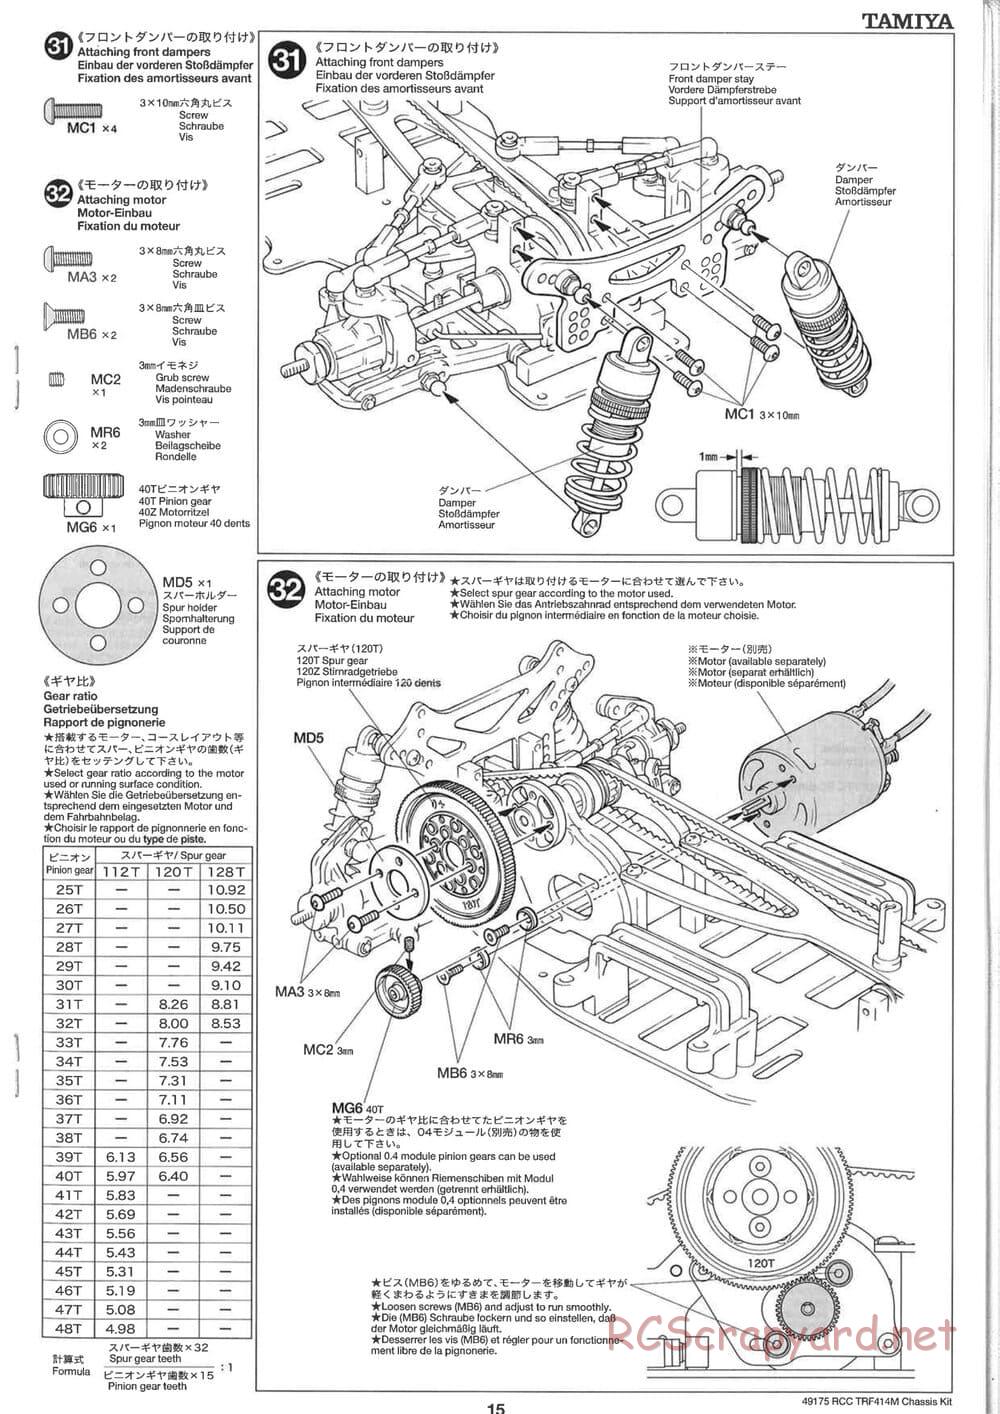 Tamiya - TRF414M Chassis - Manual - Page 15